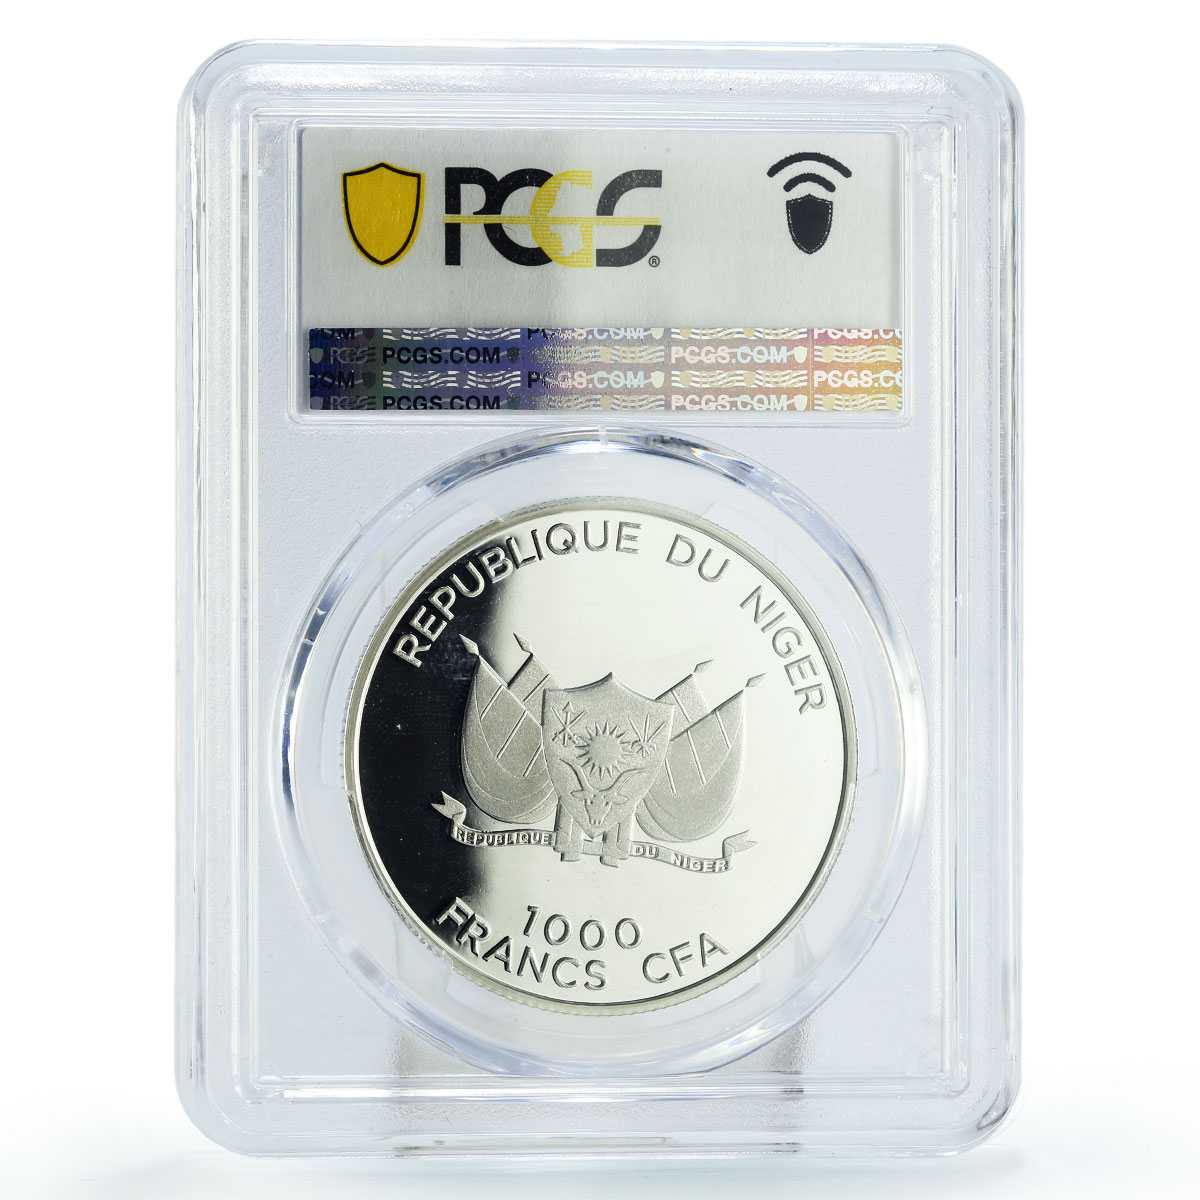 Niger 1000 francs Seafaring Mungo Park Joliba Ship PR69 PCGS silver coin 2010